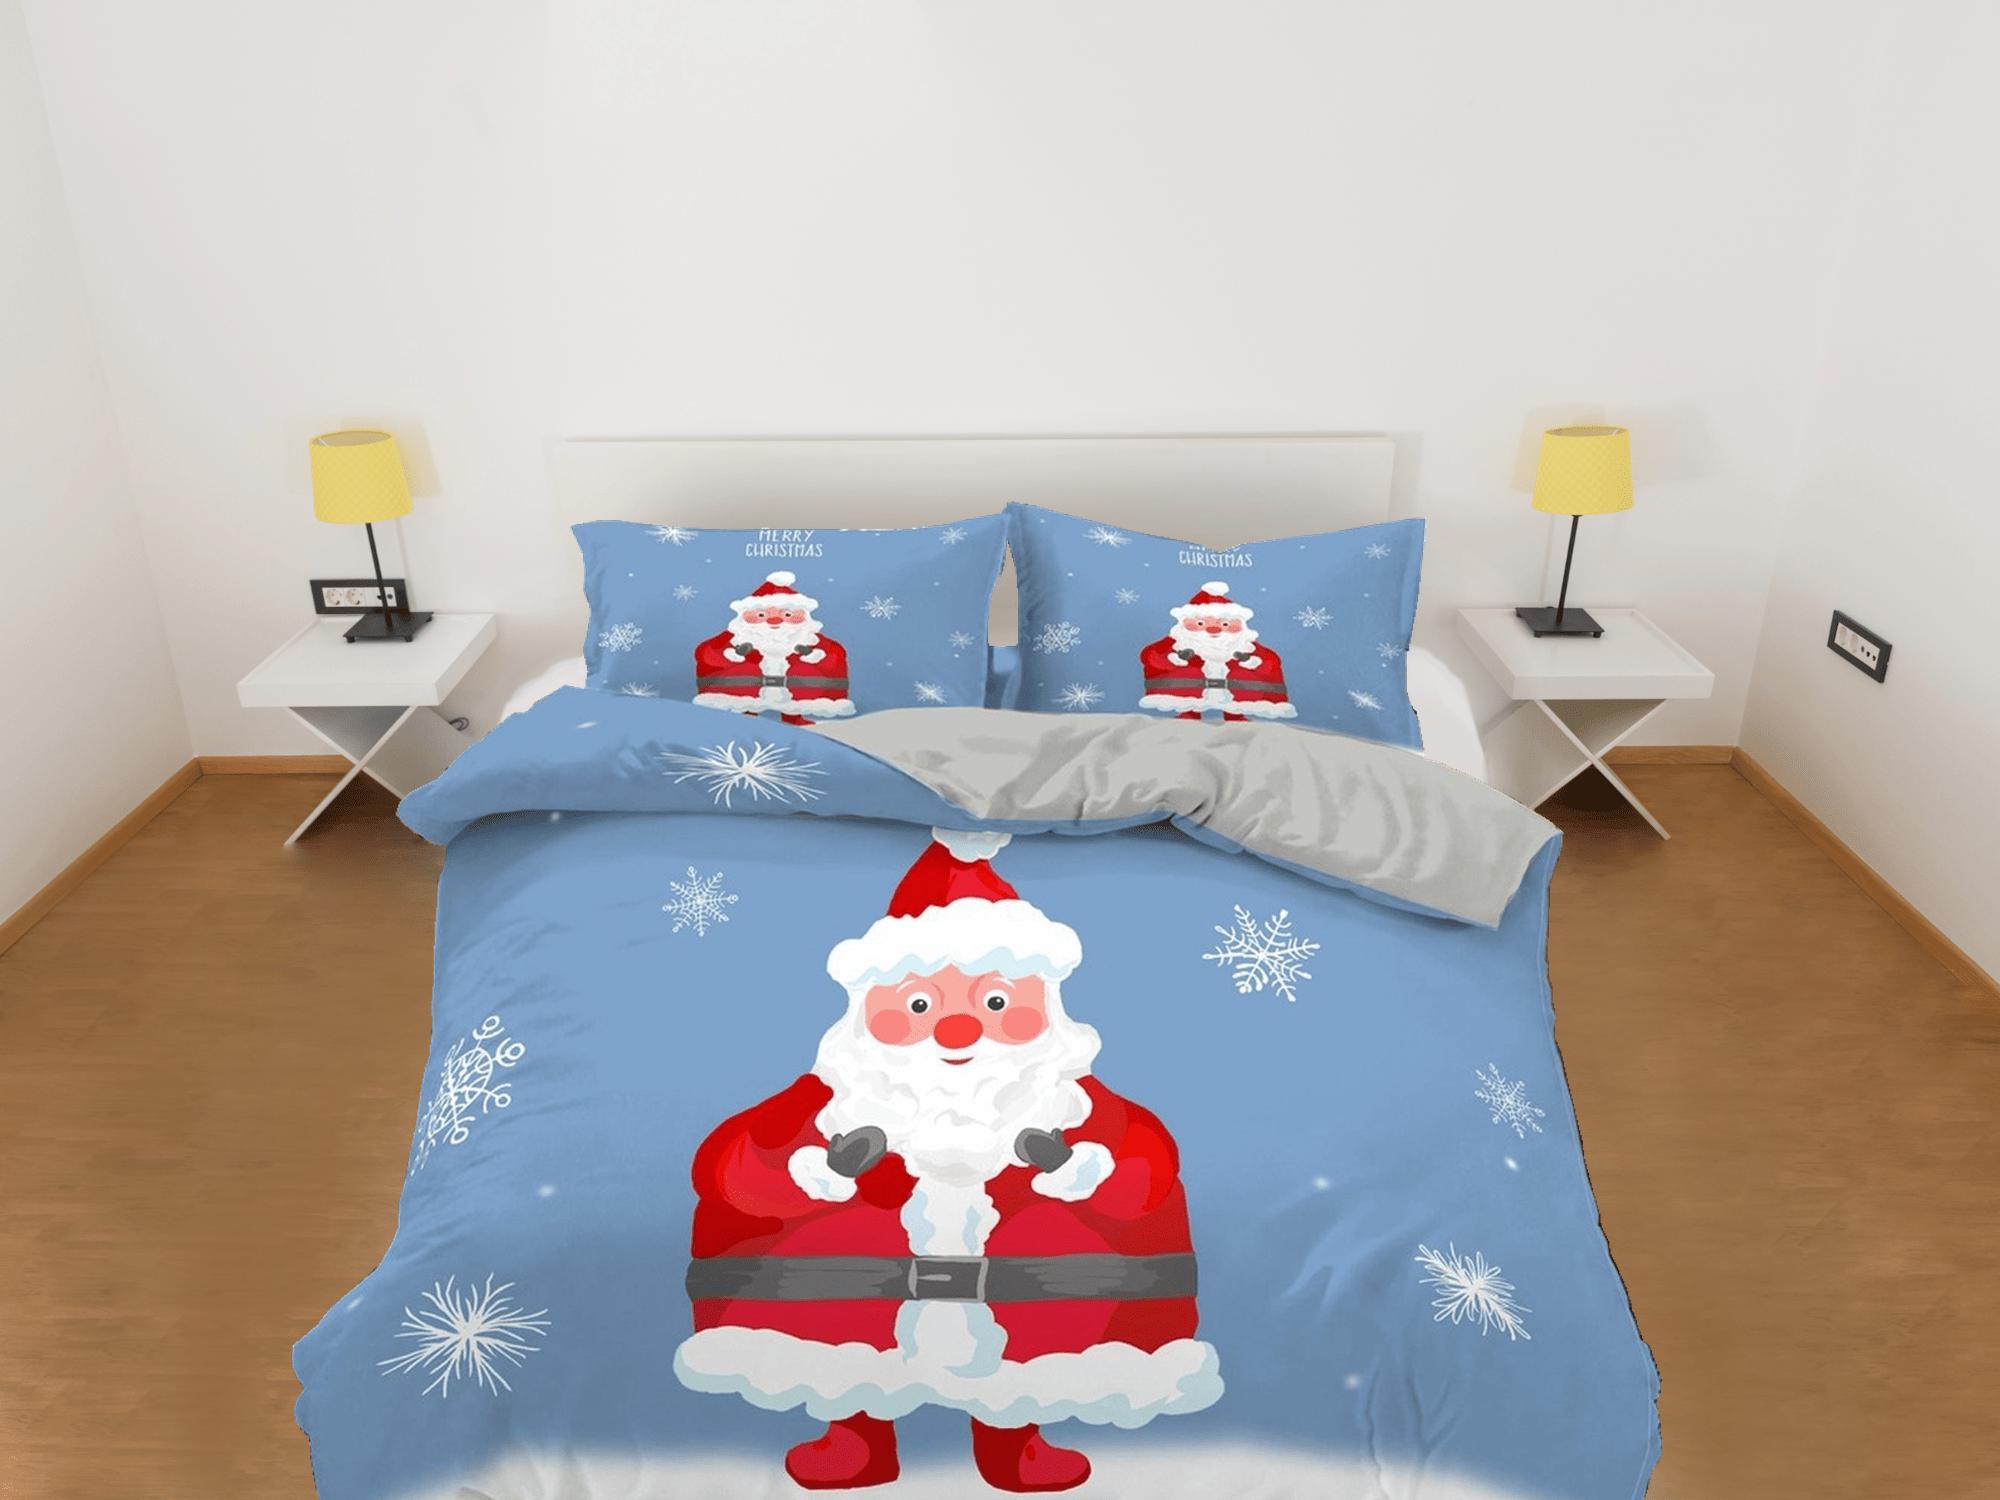 daintyduvet Santa Claus Christmas blue bedding & pillowcase holiday gift duvet cover king queen full twin toddler bedding baby Christmas farmhouse decor